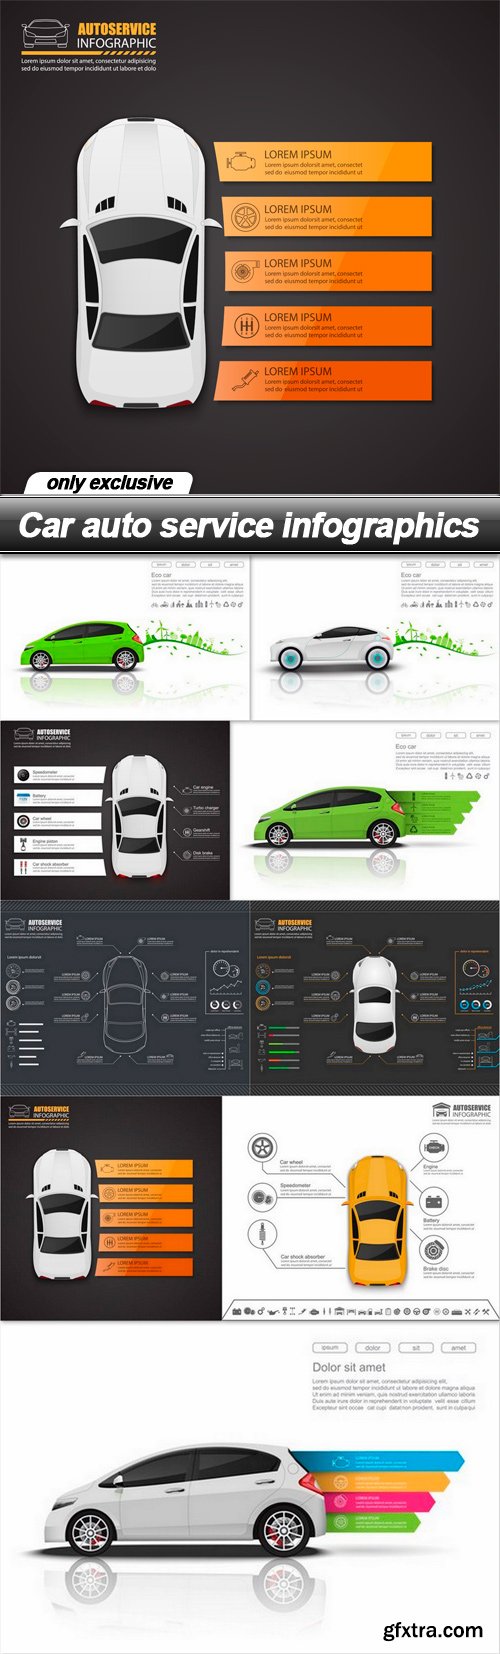 Car auto service infographics - 9 EPS